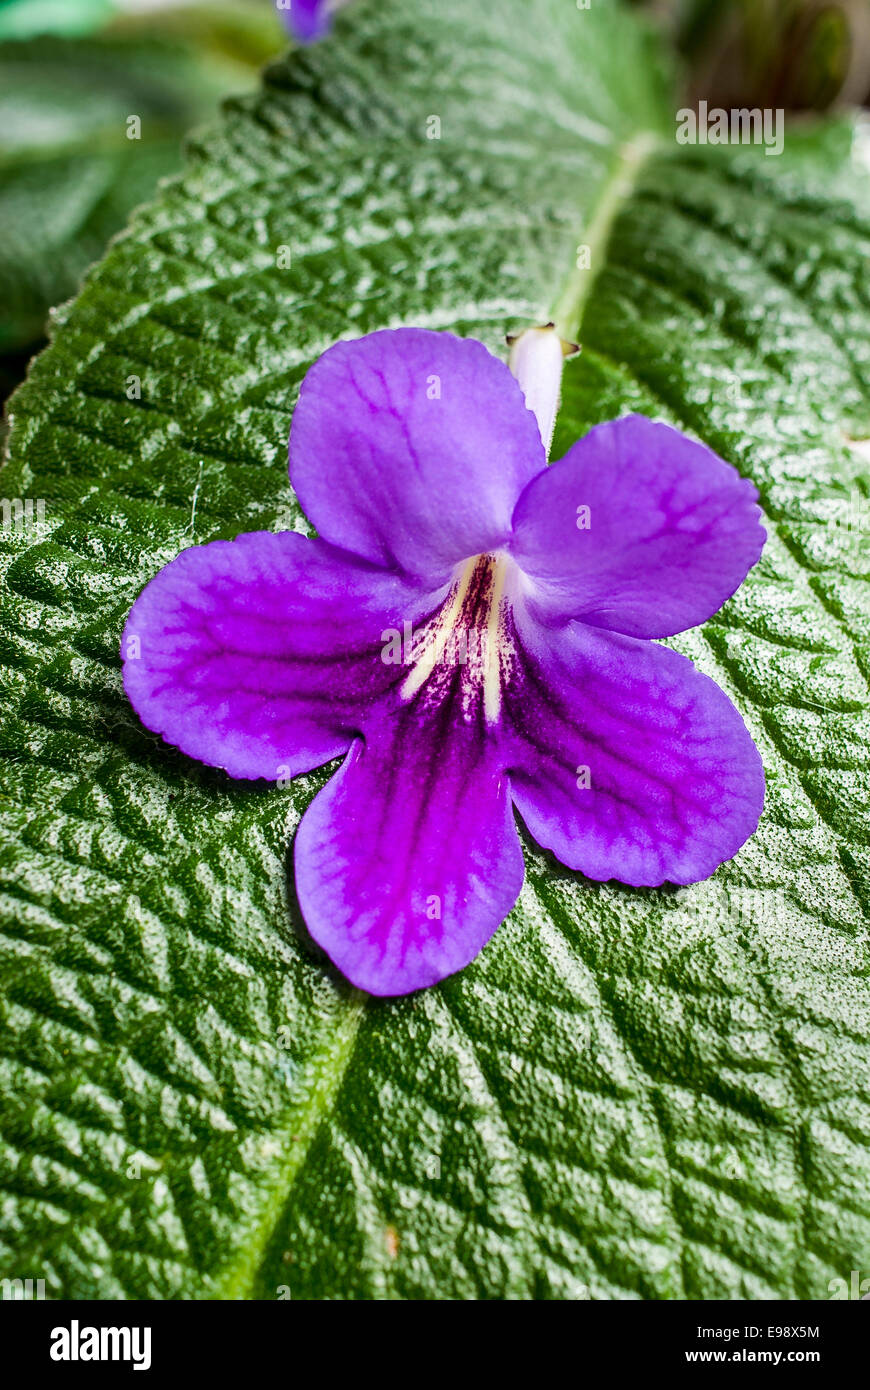 Streptocarpus 'Bethan' flower on leaf Stock Photo